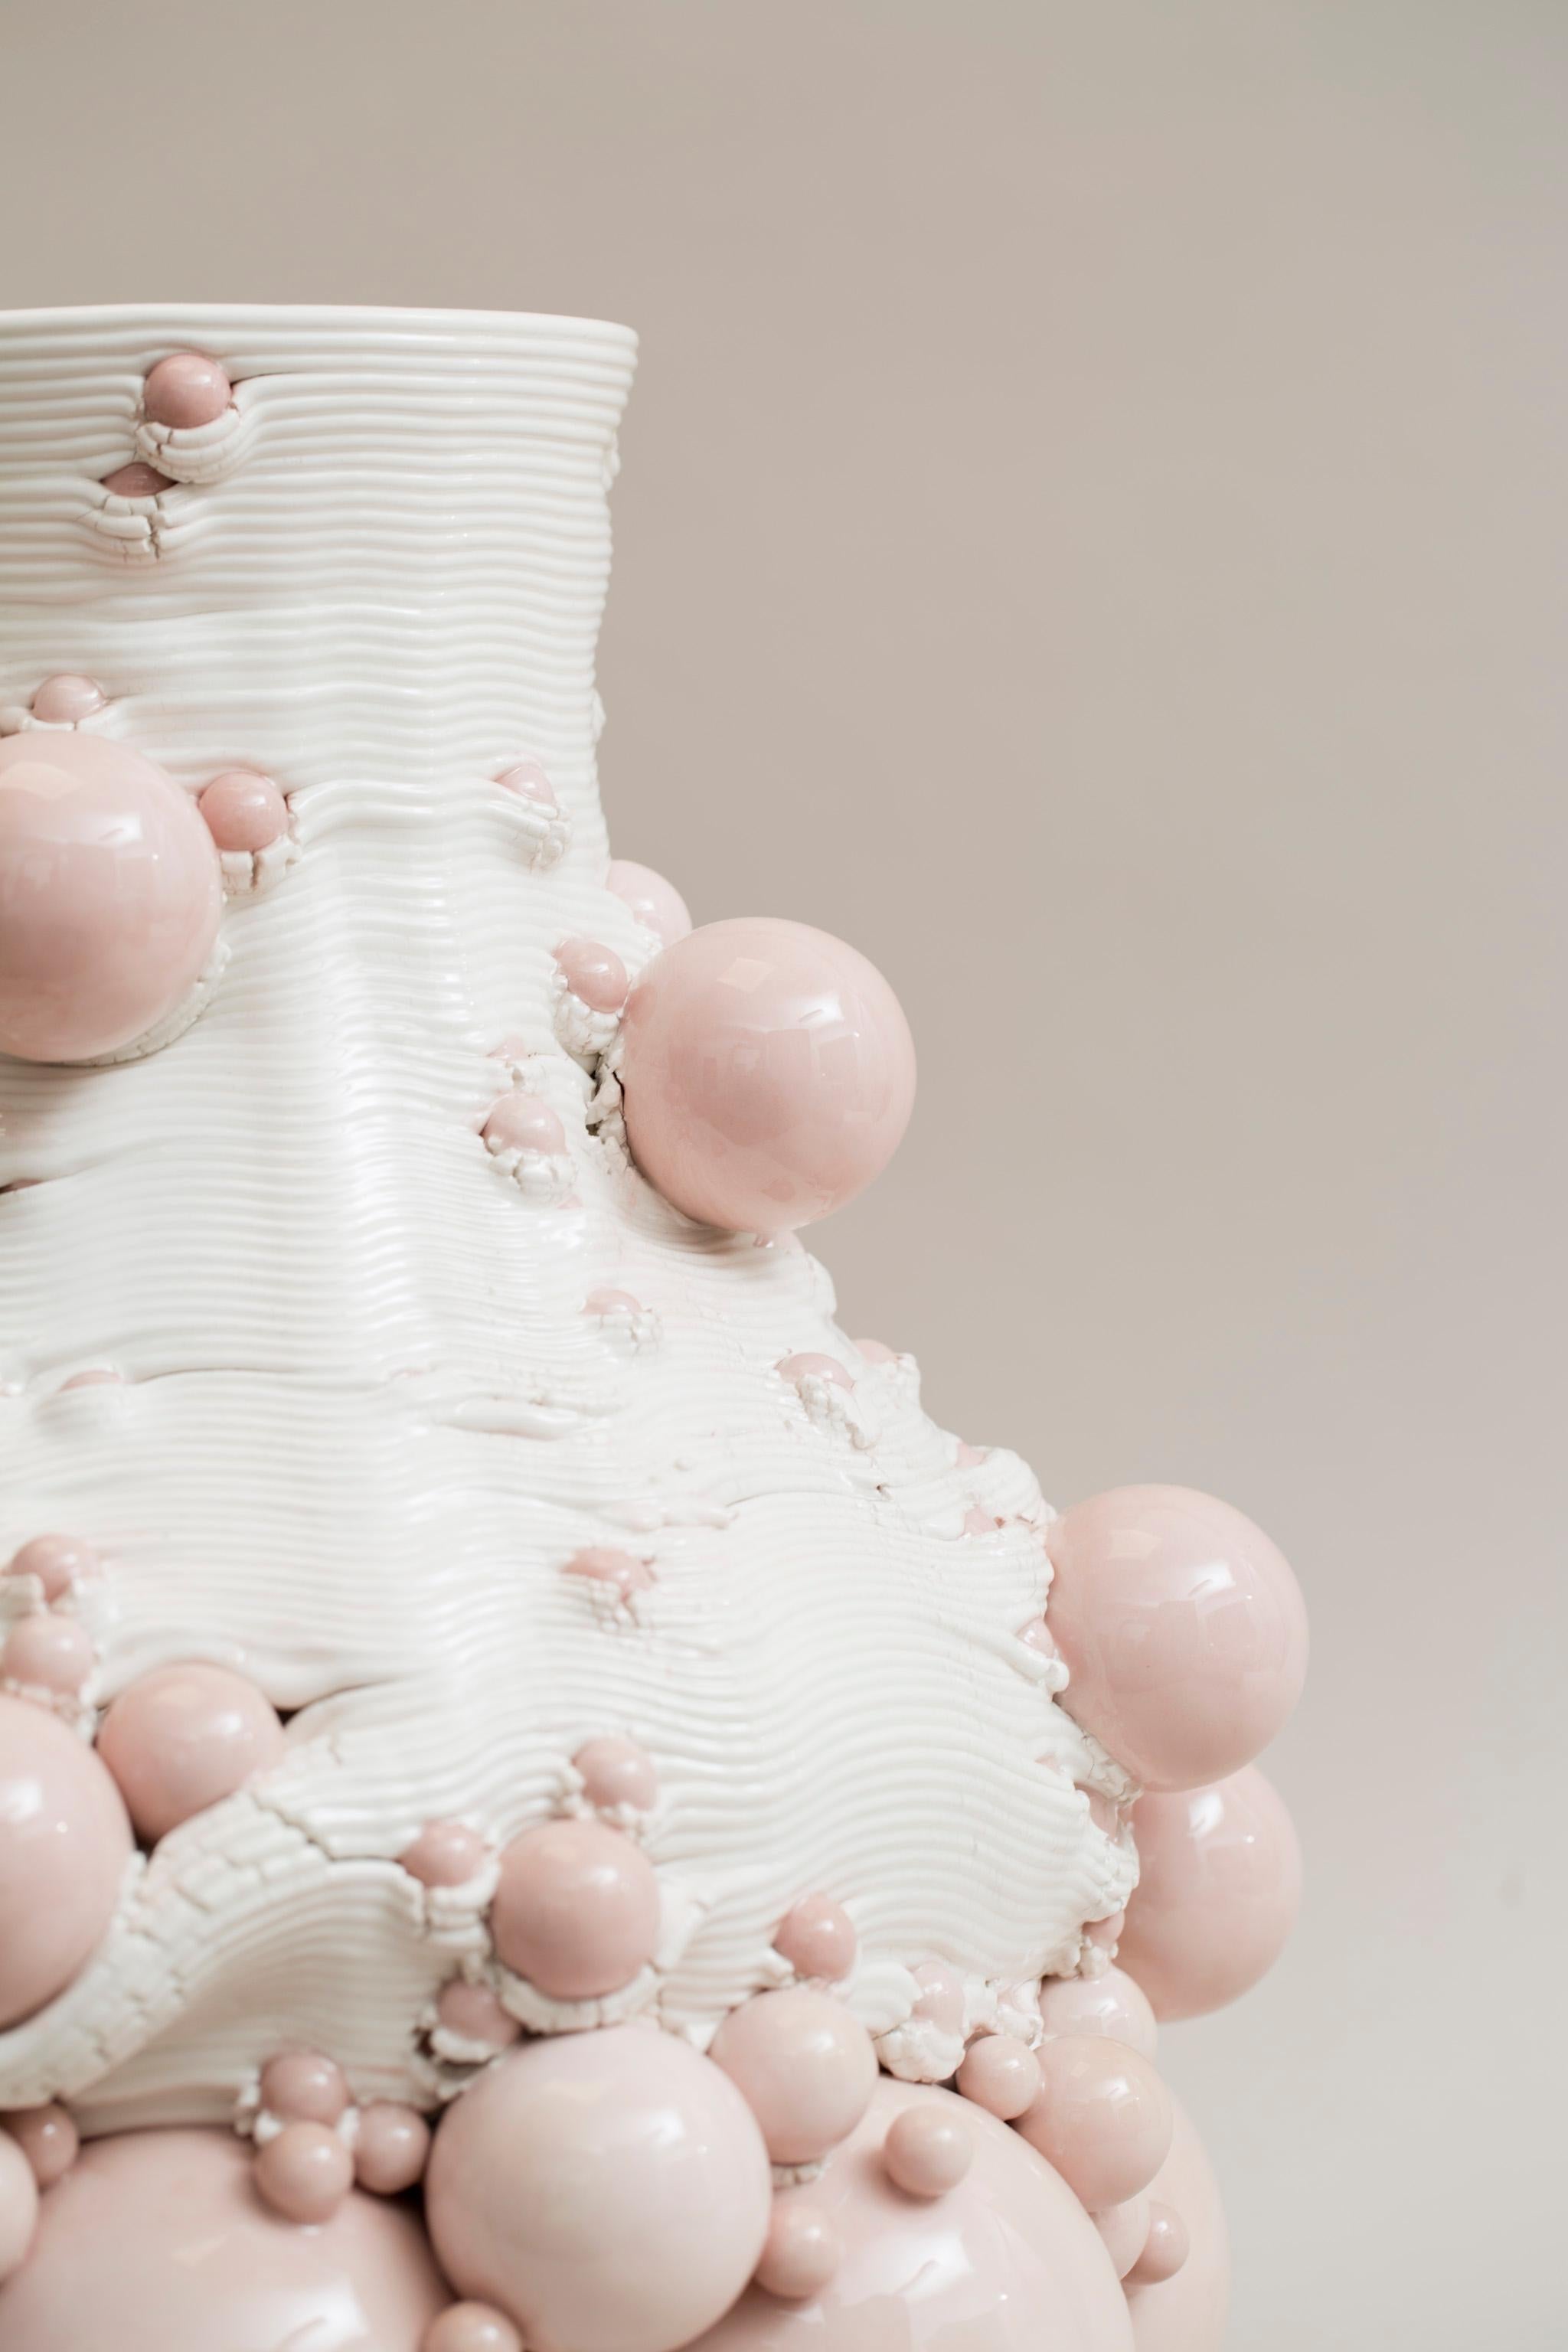 White Ceramic Sculptural Vase Italian Contemporary, 21st Century contemporary For Sale 5